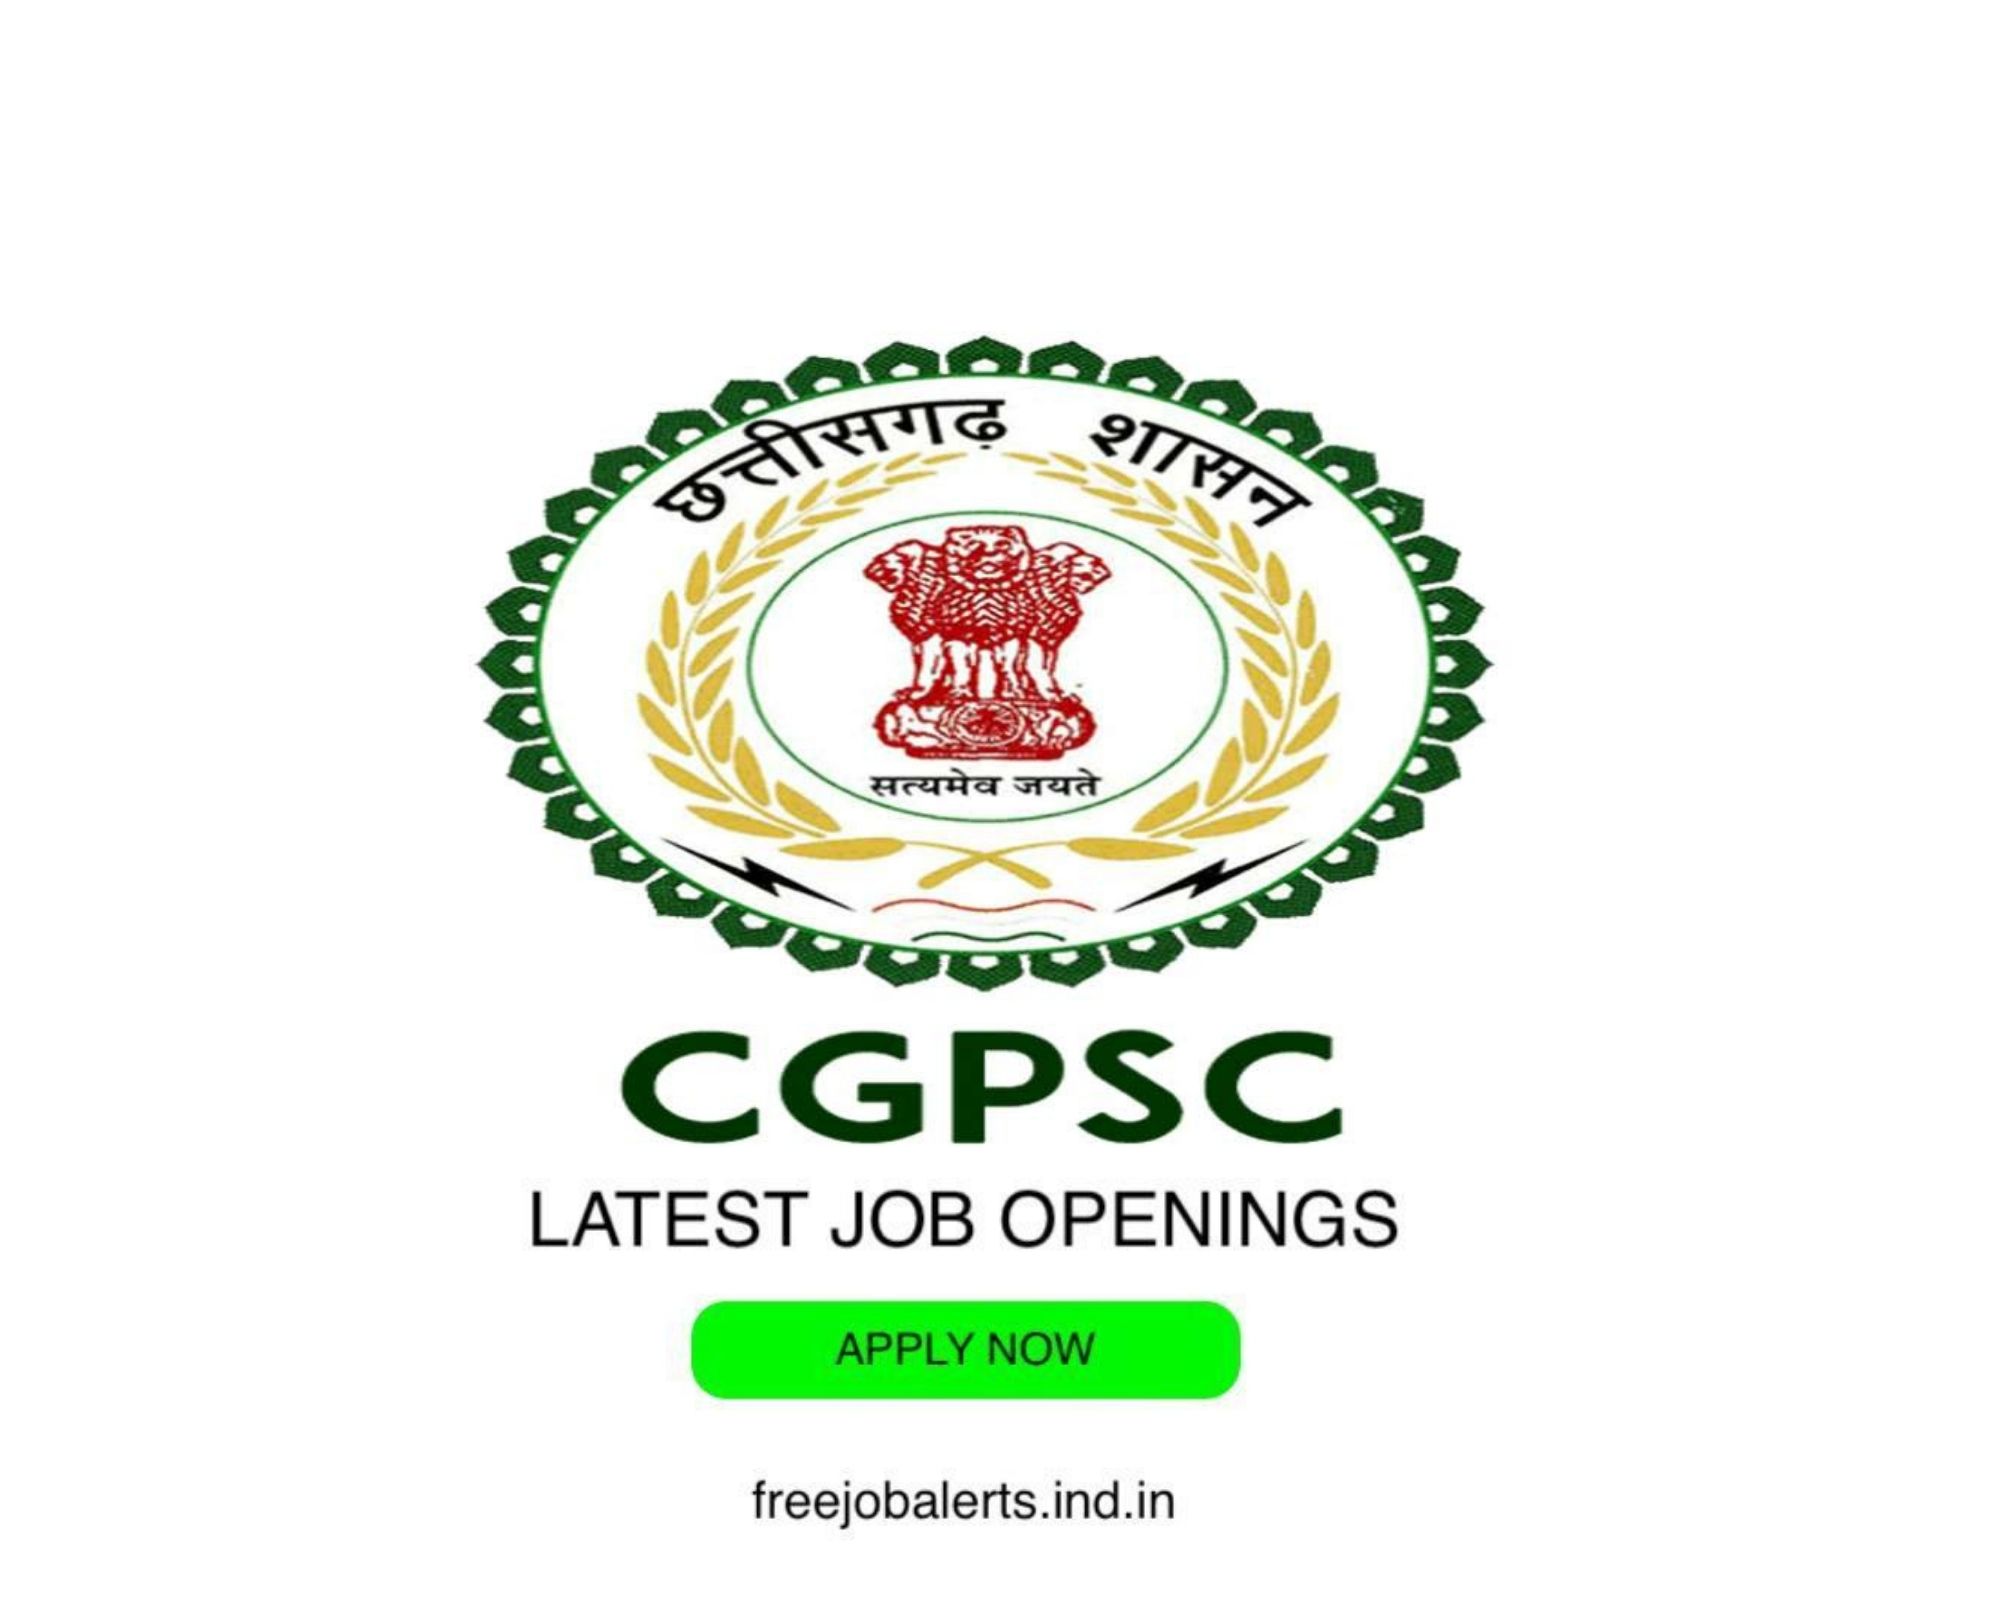 CGPSC -Chhattisgarh Public Service Commission -Latest Govt job openings - Free job alerts, Indian Govt Jobs - Free Job Alert